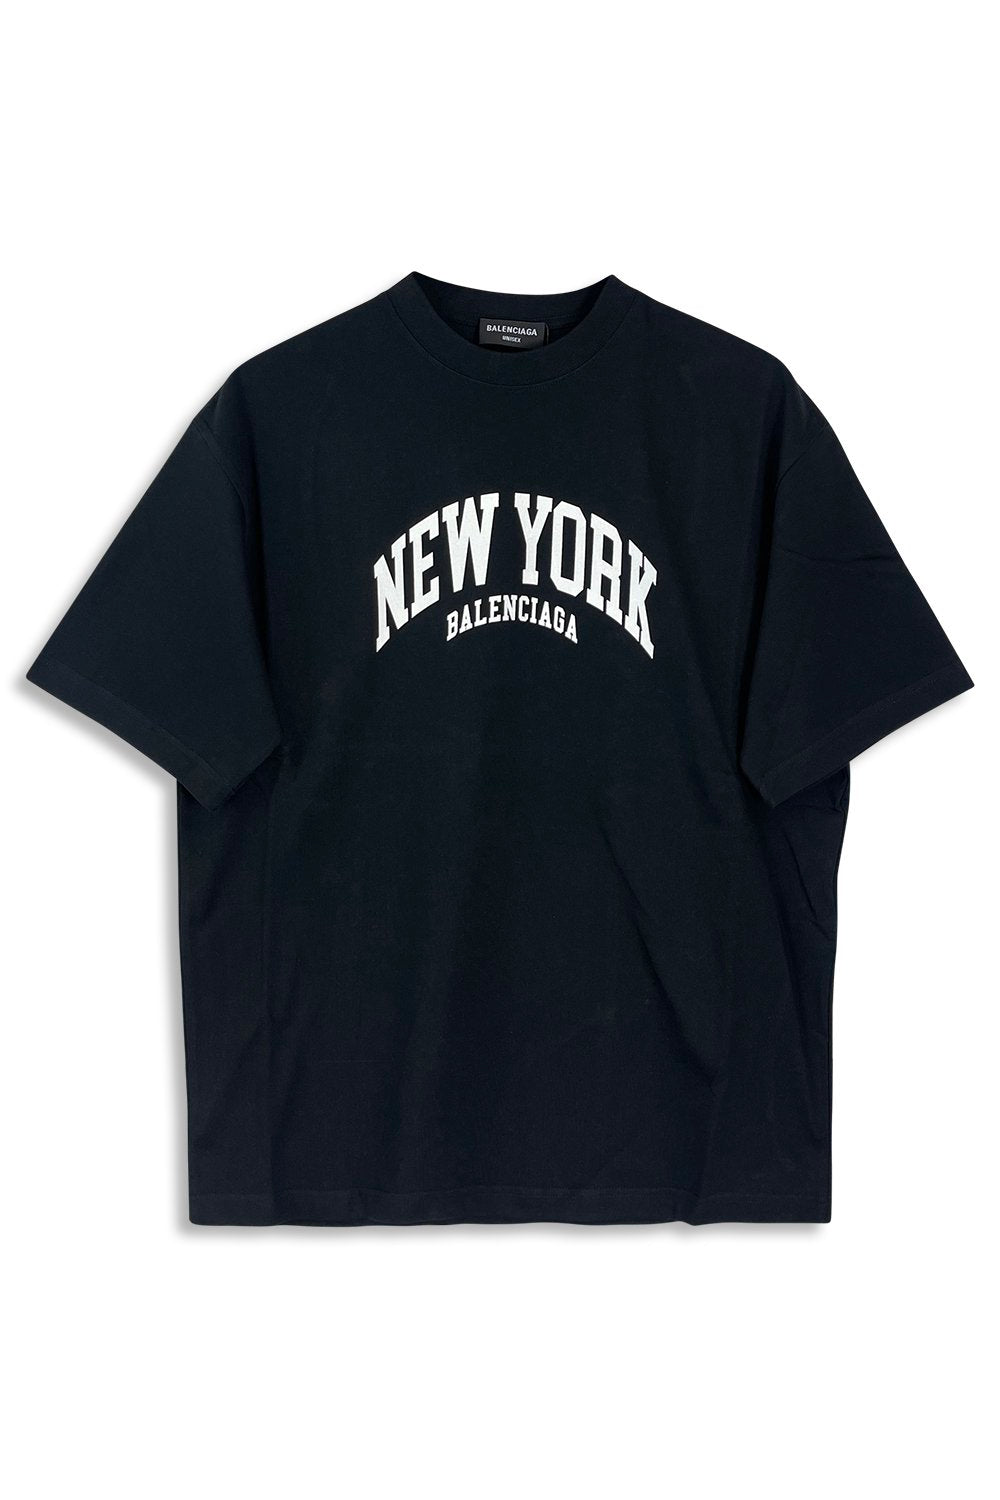 Men's Black Balenciaga New York Oversized T-Shirt